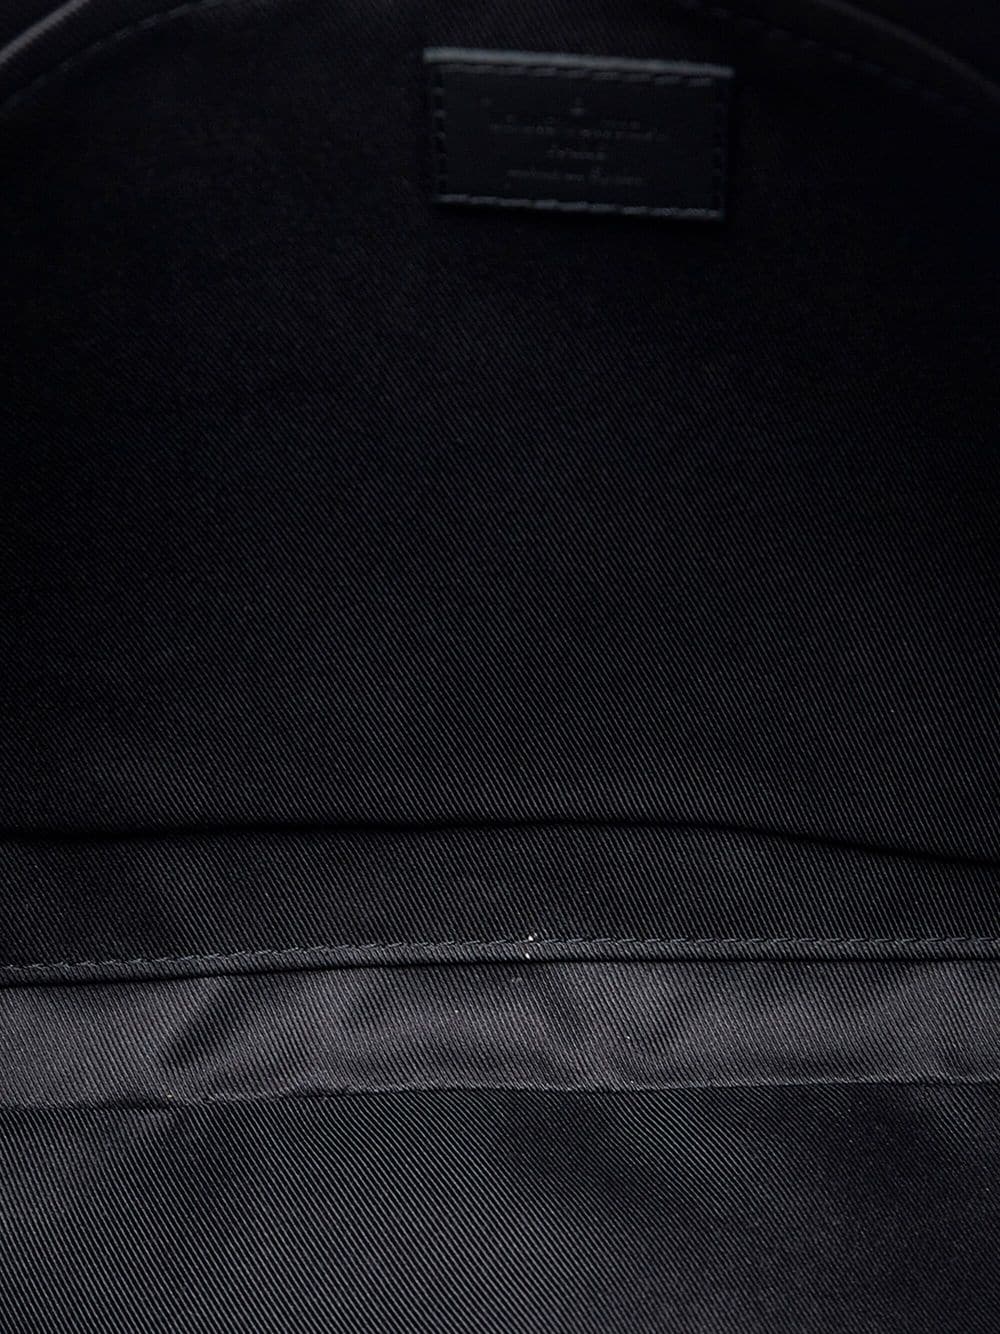 Louis Vuitton Pochette Discovery PM Clutch - Farfetch